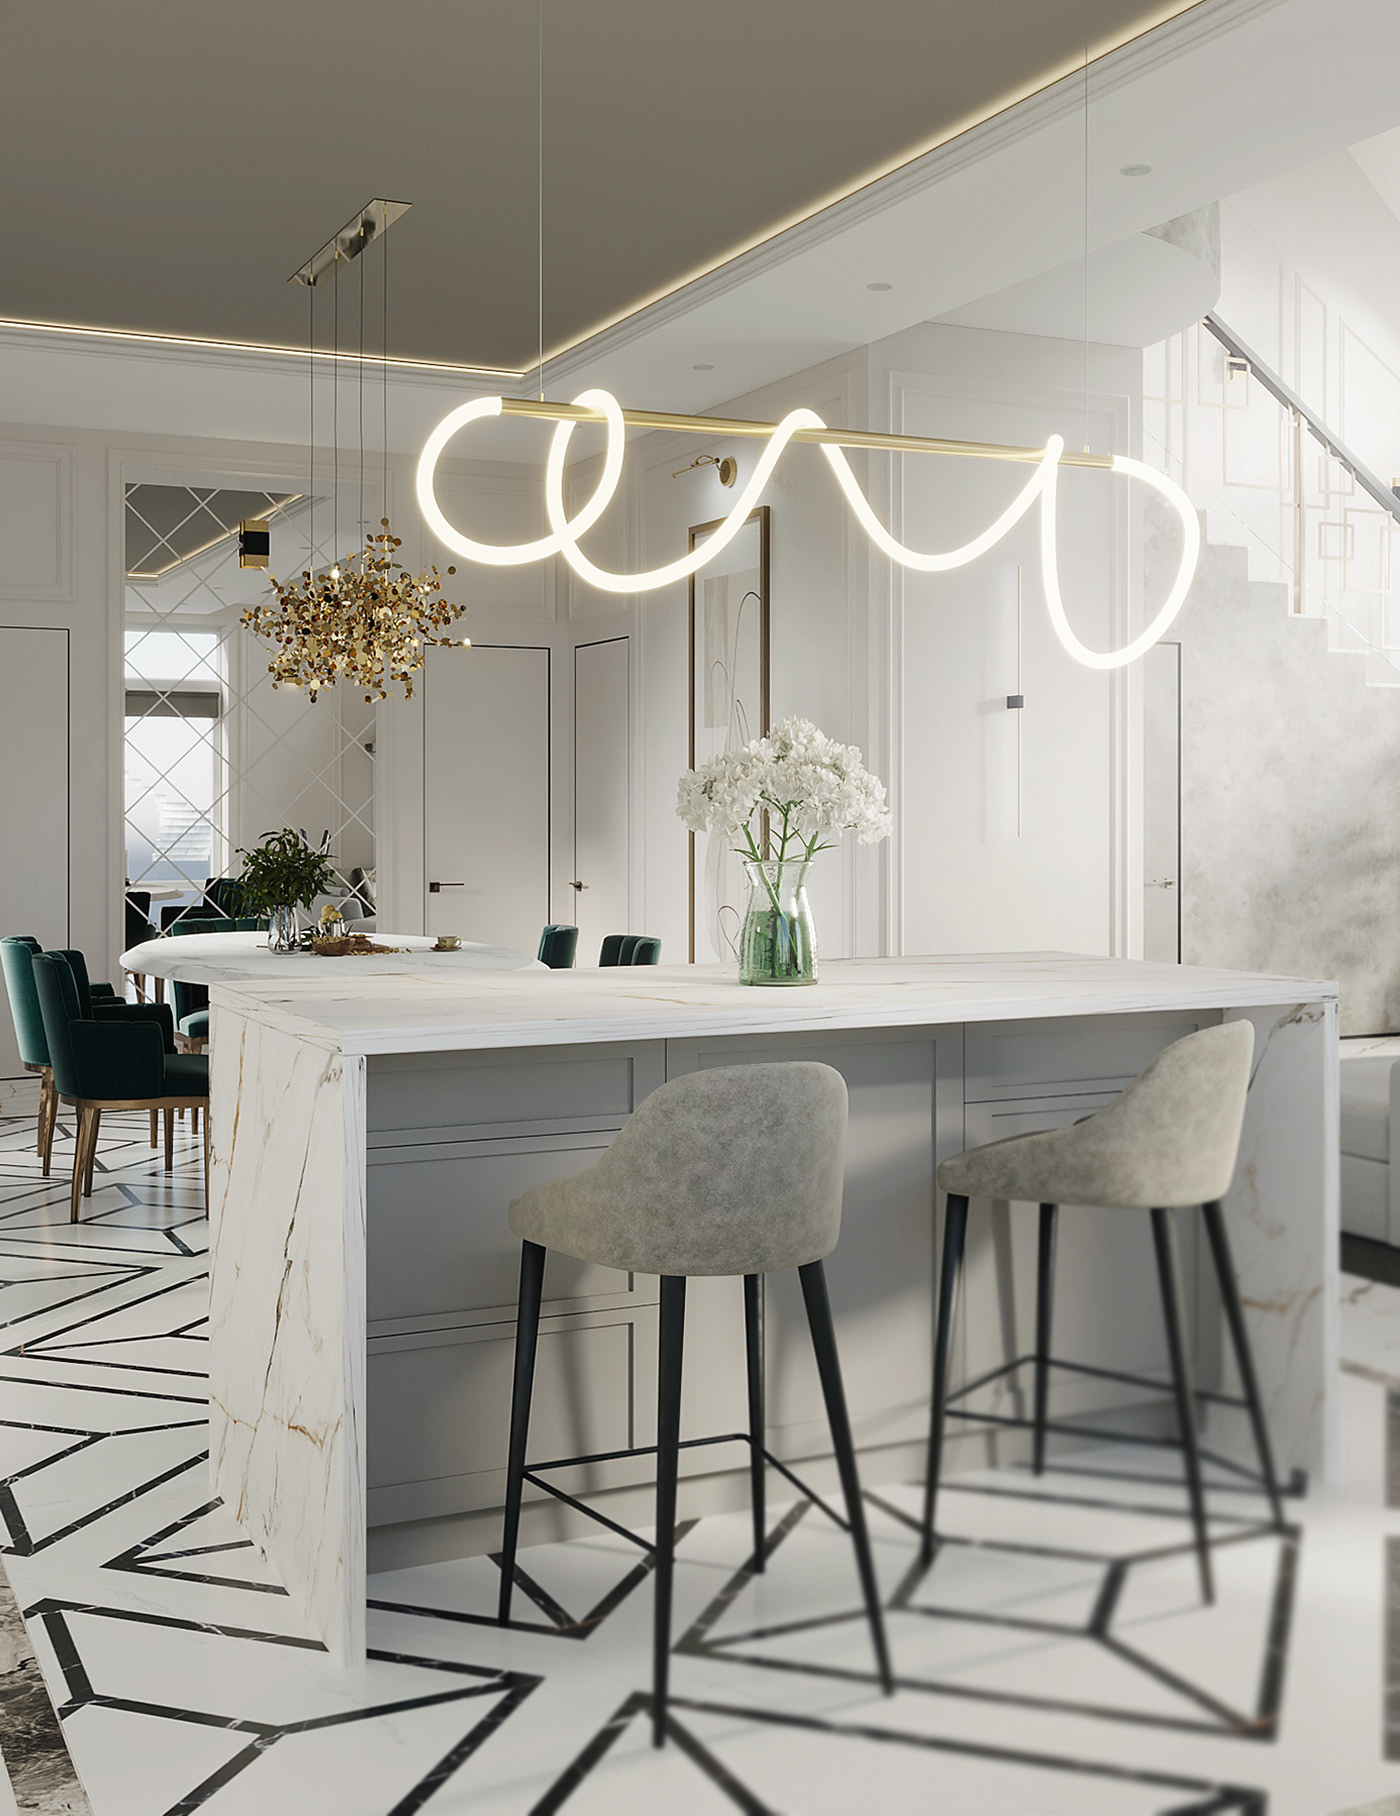 3ds max art deco corona render  design Interior interior design  kitchen kitchen design Render visualization